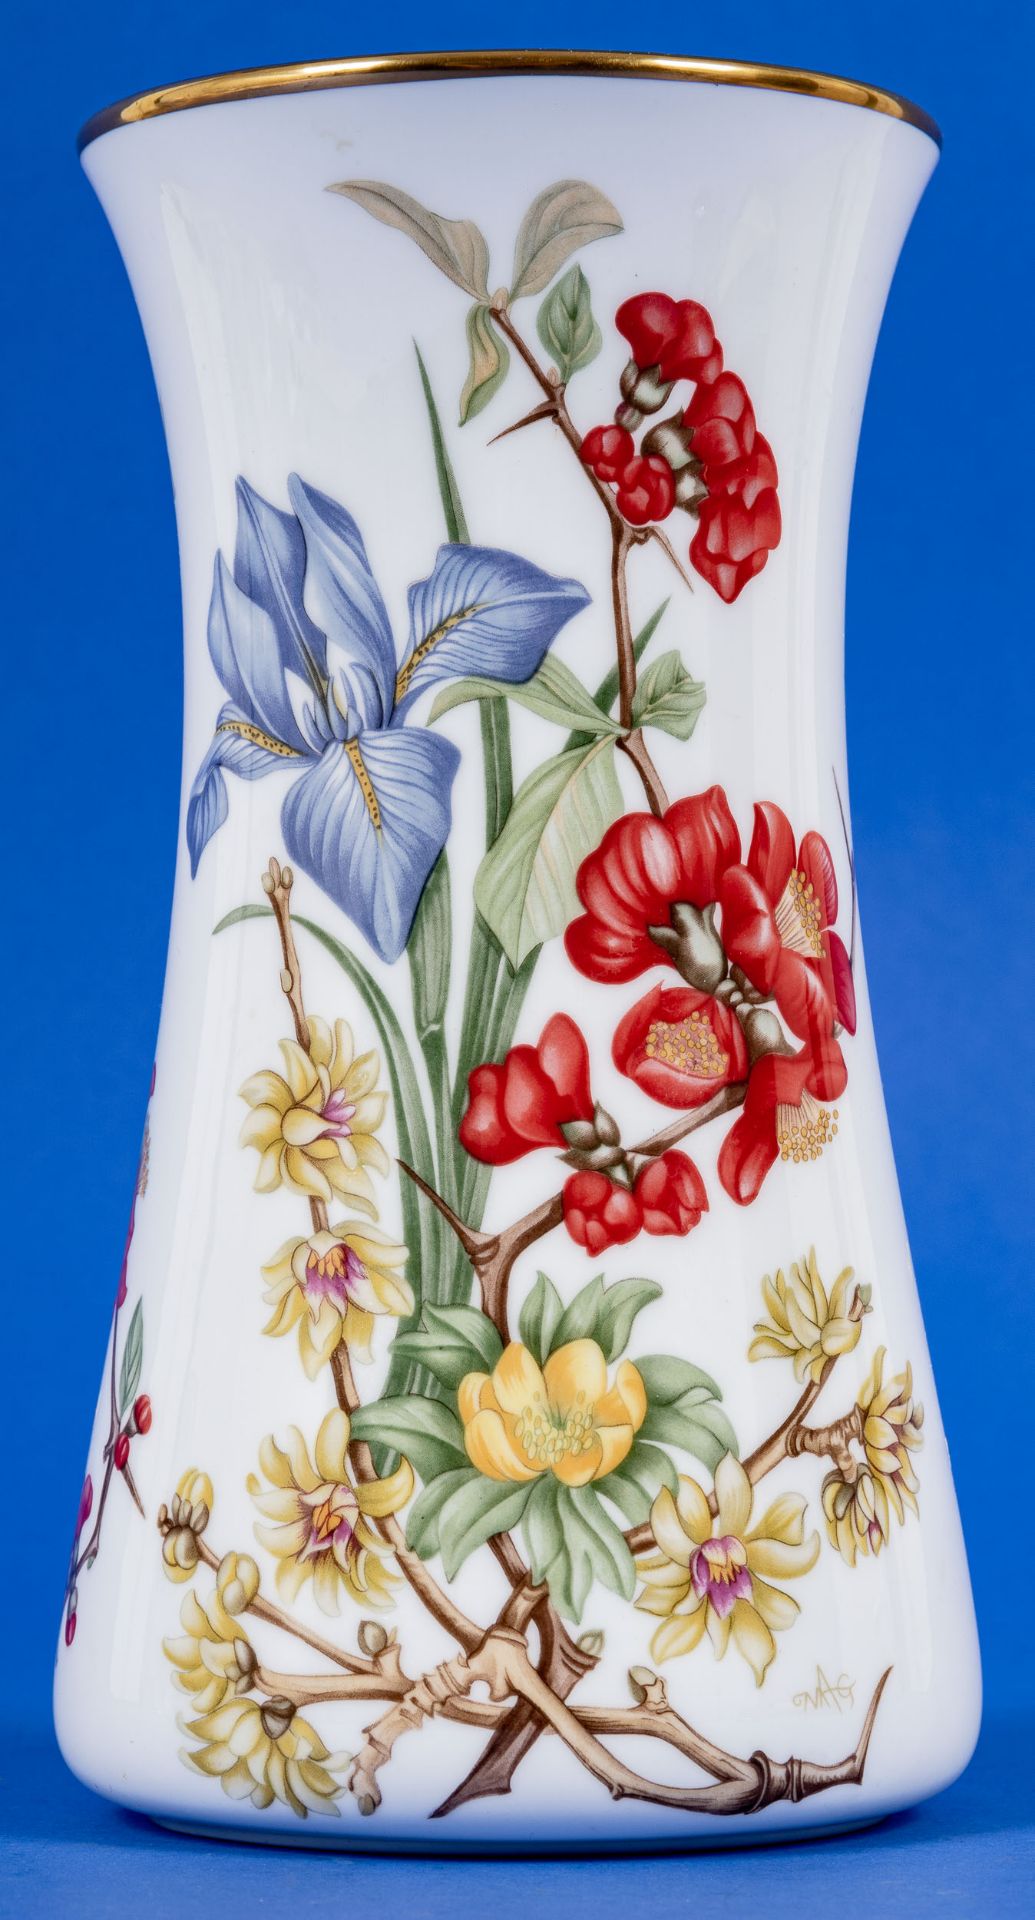 Keulenförmige Blumenvase, Wedgewood, Bone-China, Höhe ca. 22 cm, polychrom lithografierte Floraldek - Image 2 of 5